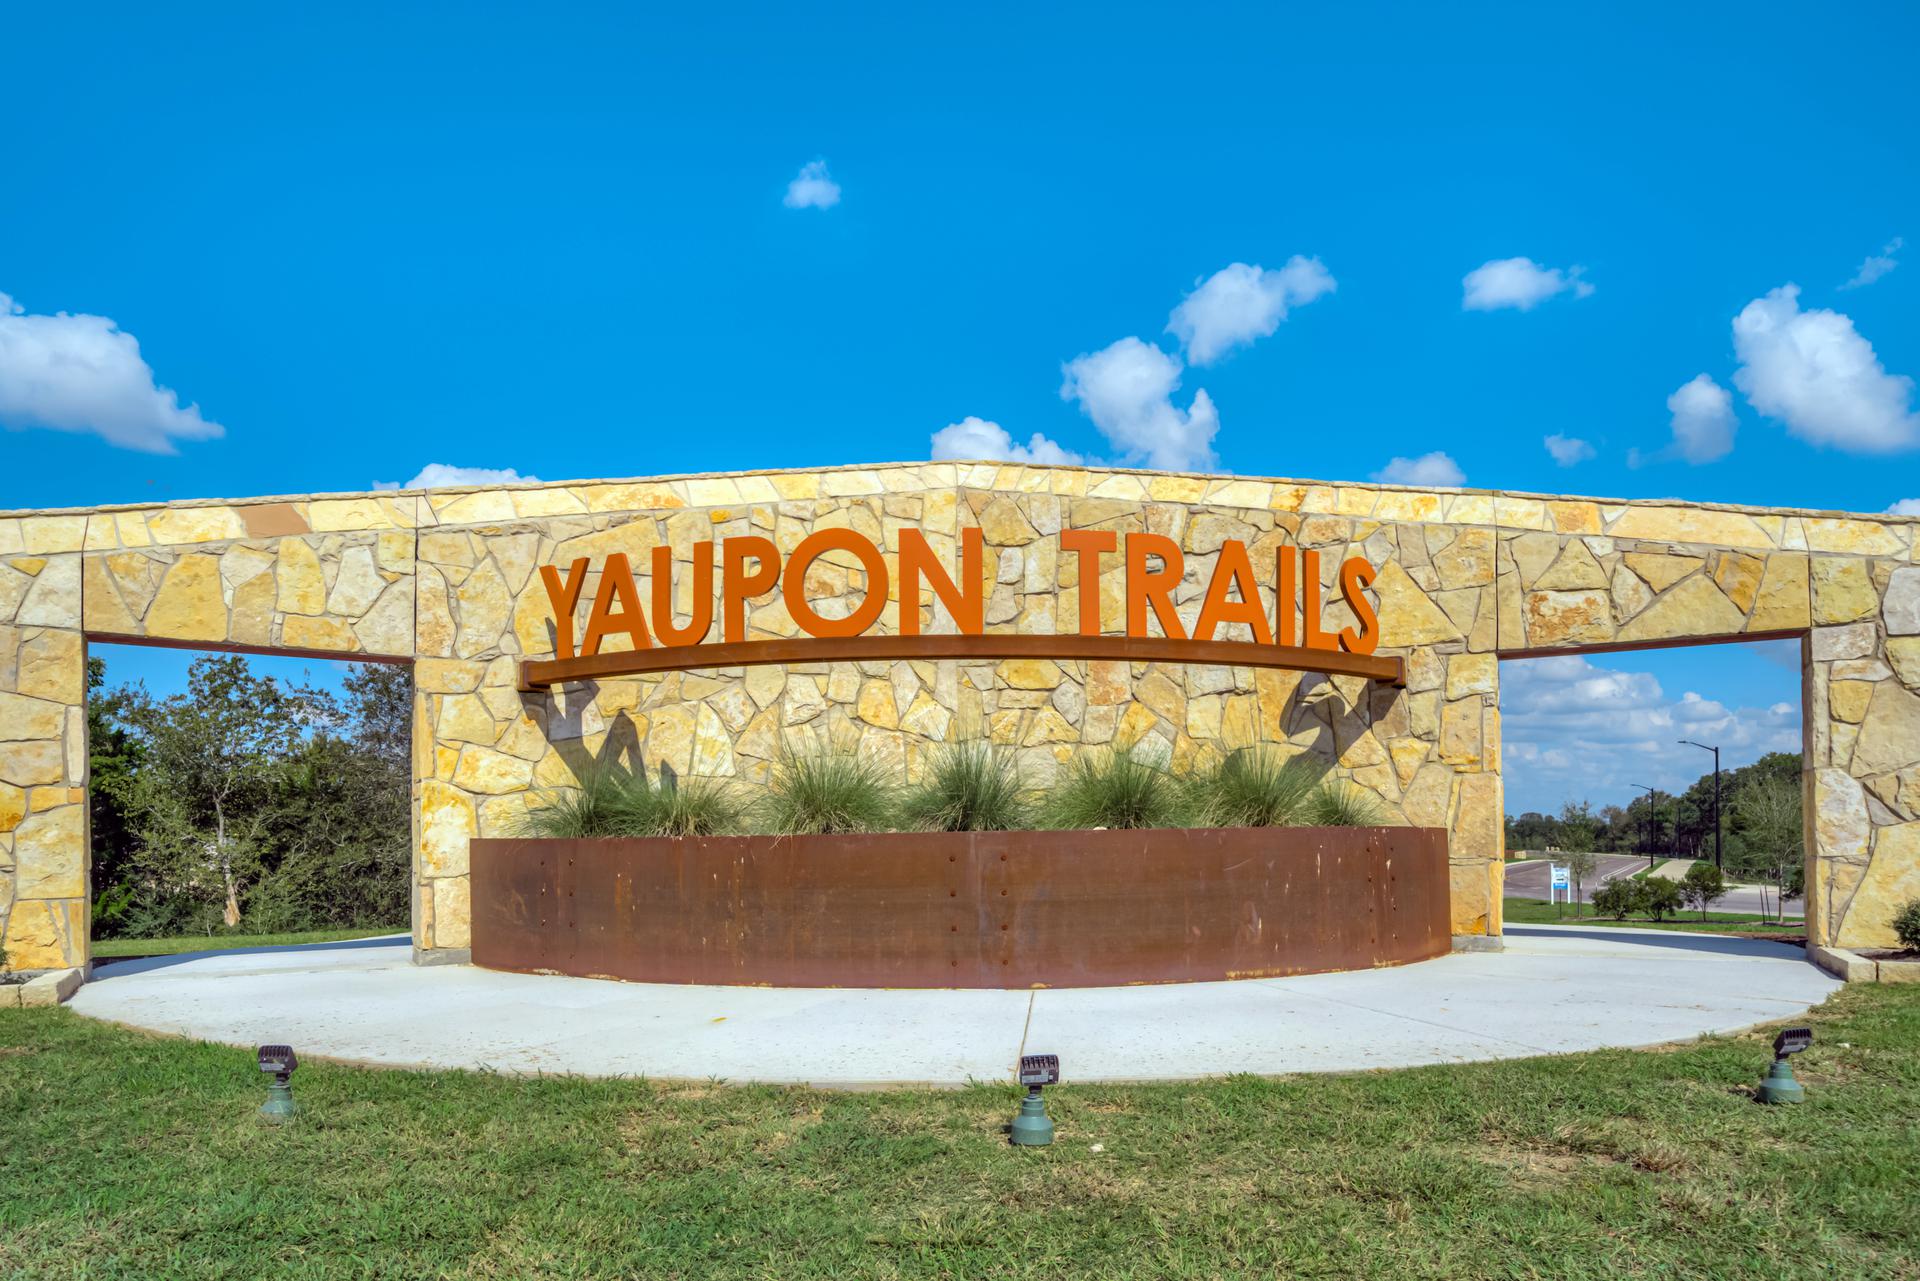 Yaupon Trails in Bryan, TX